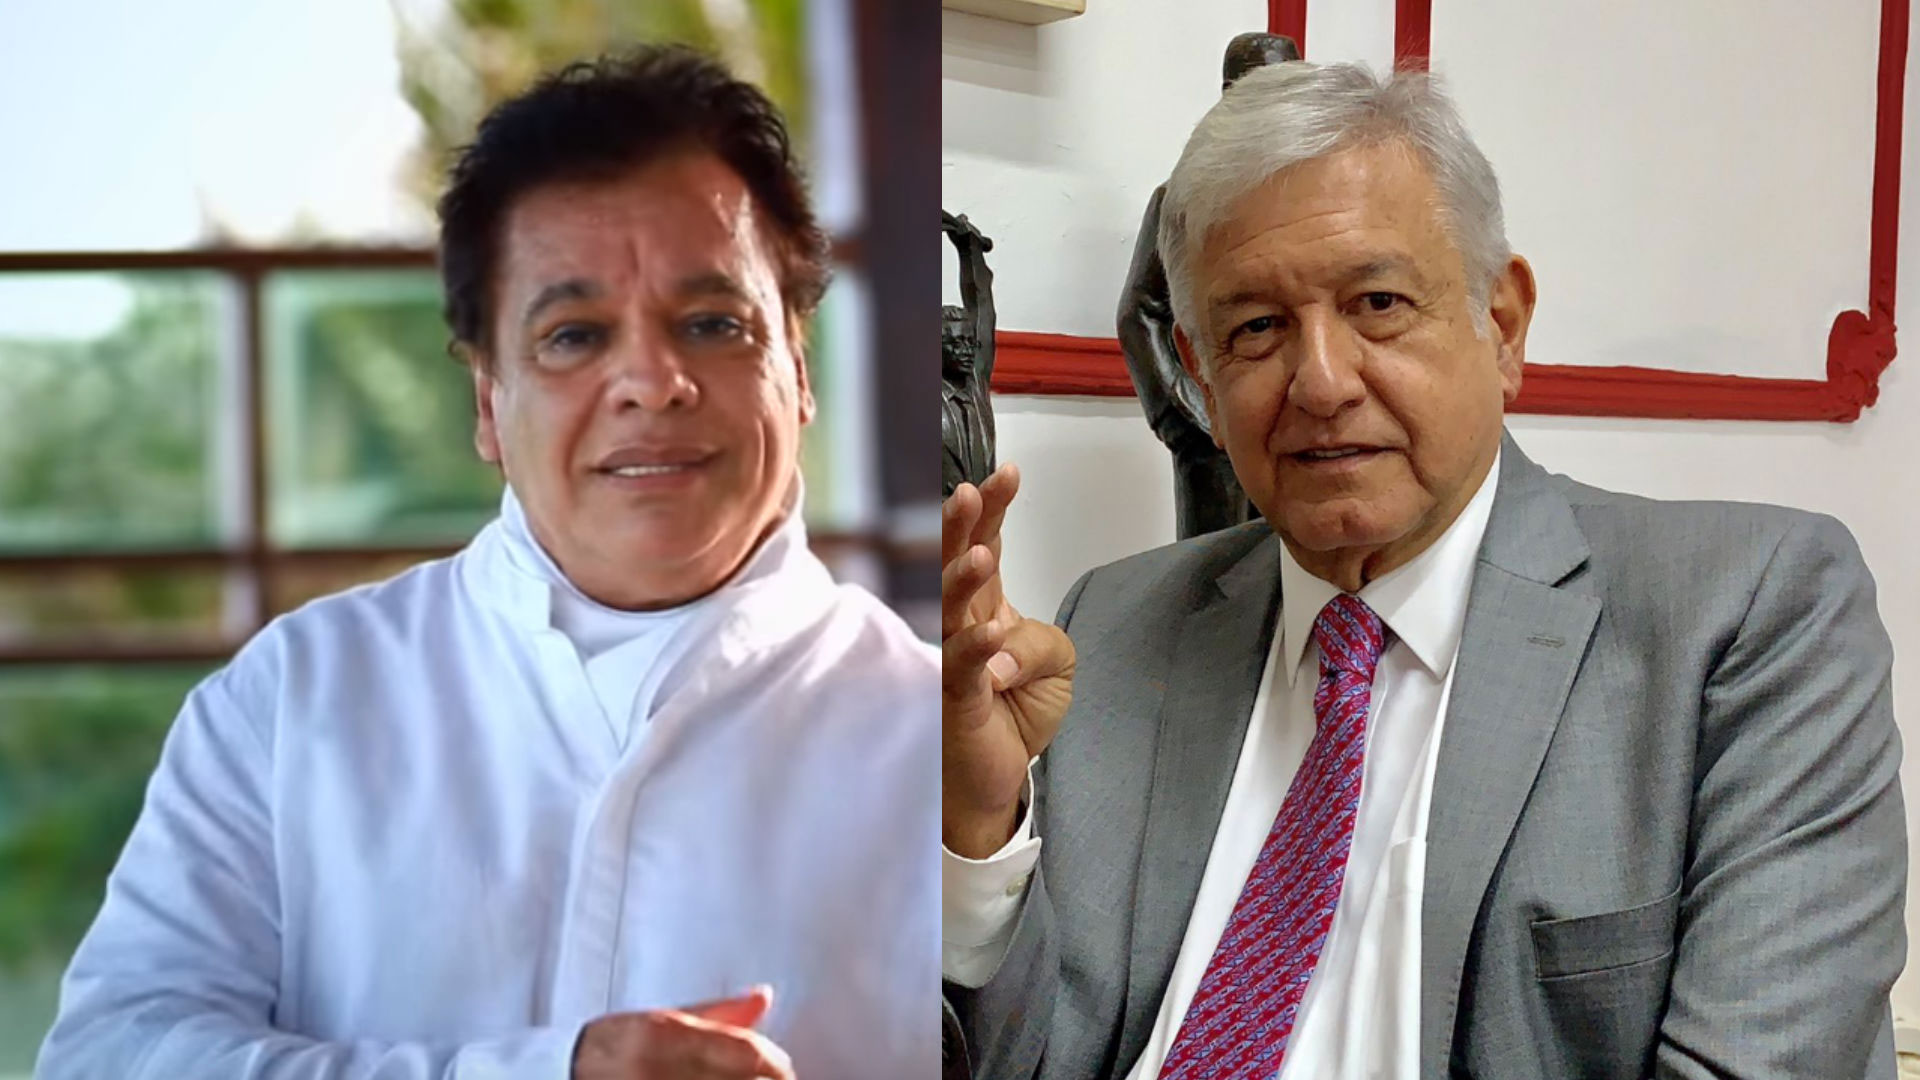   Alberto Aguilera would expect help from Andrés Manuel López Obrador, according to Joaquín Muñoz (Photo: Twitter Lopezobrador, YouTube Juan Gabriel)